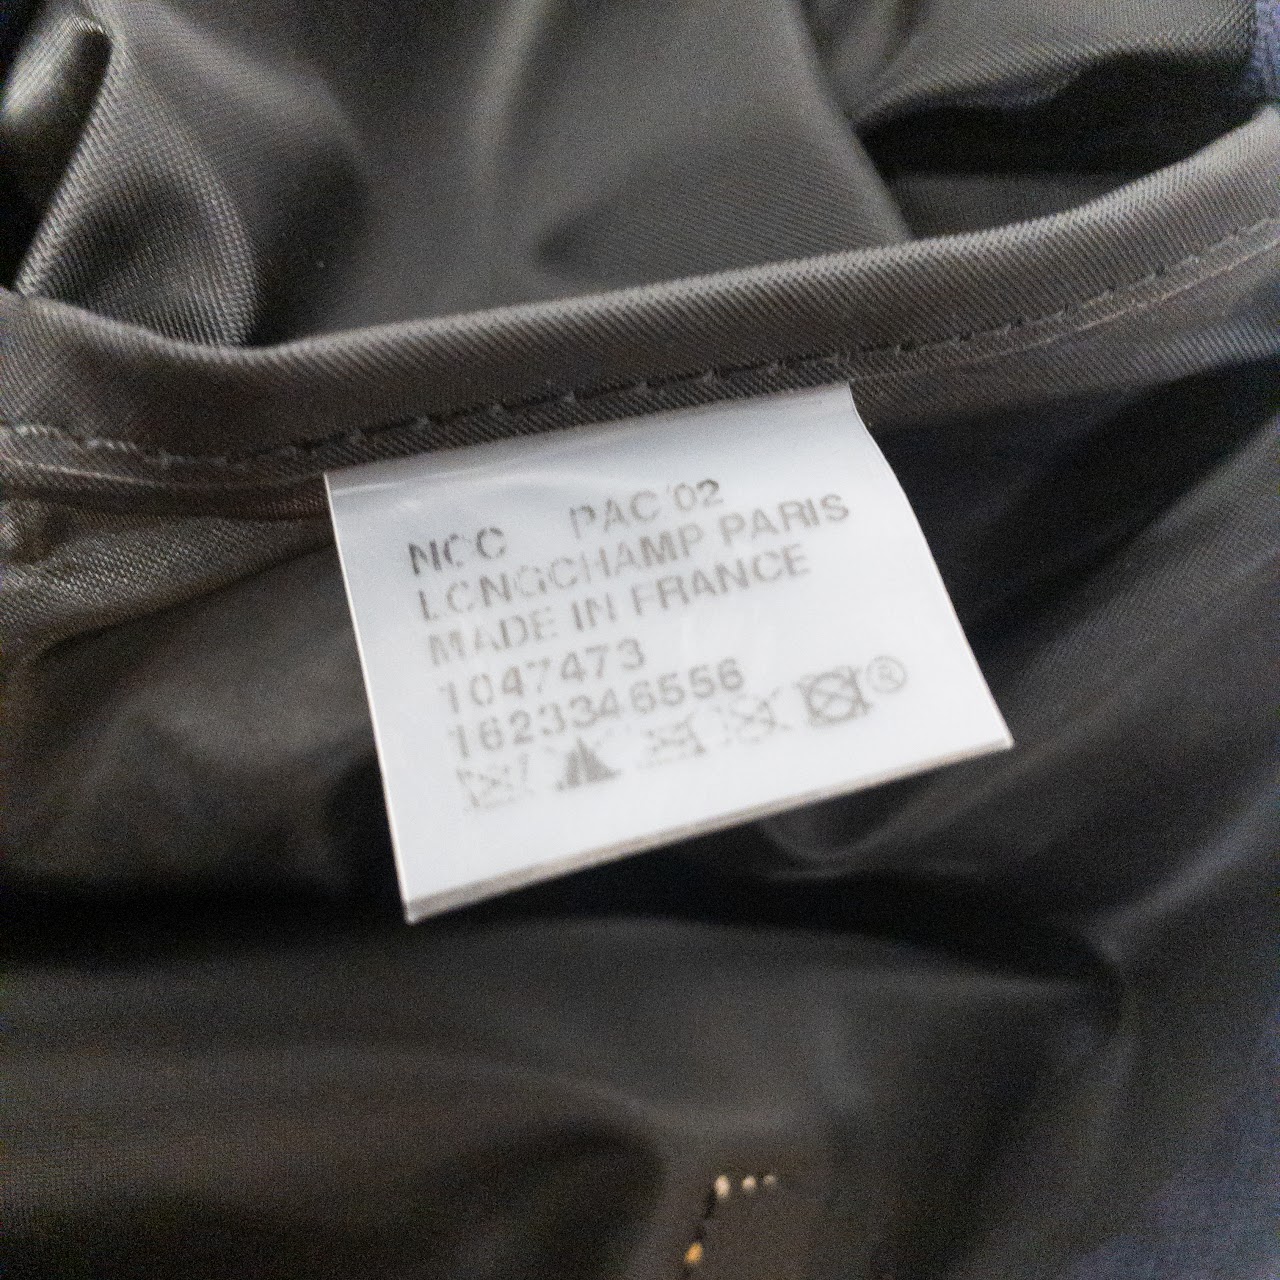 Longchamp Small Collapsible Pliage Bag